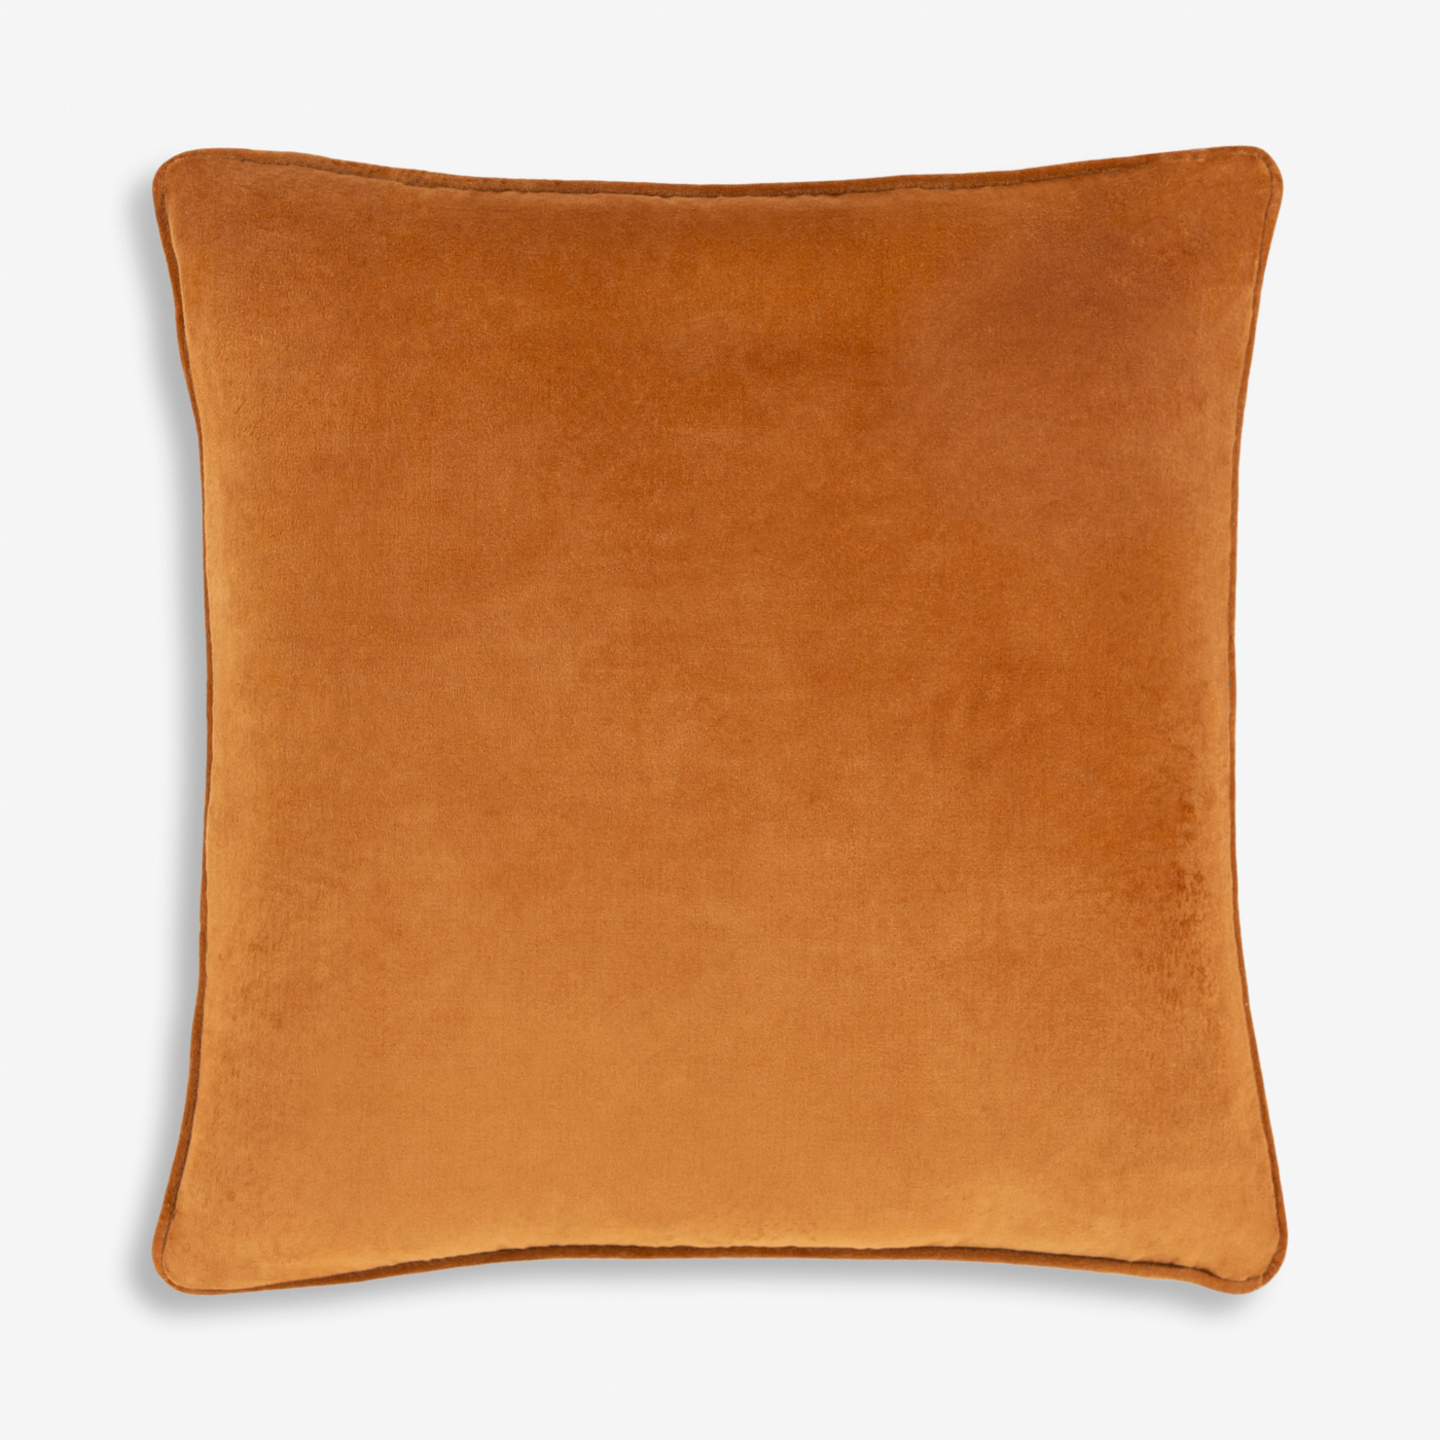 Everly Saffron Velvet Pillow (20"x20")